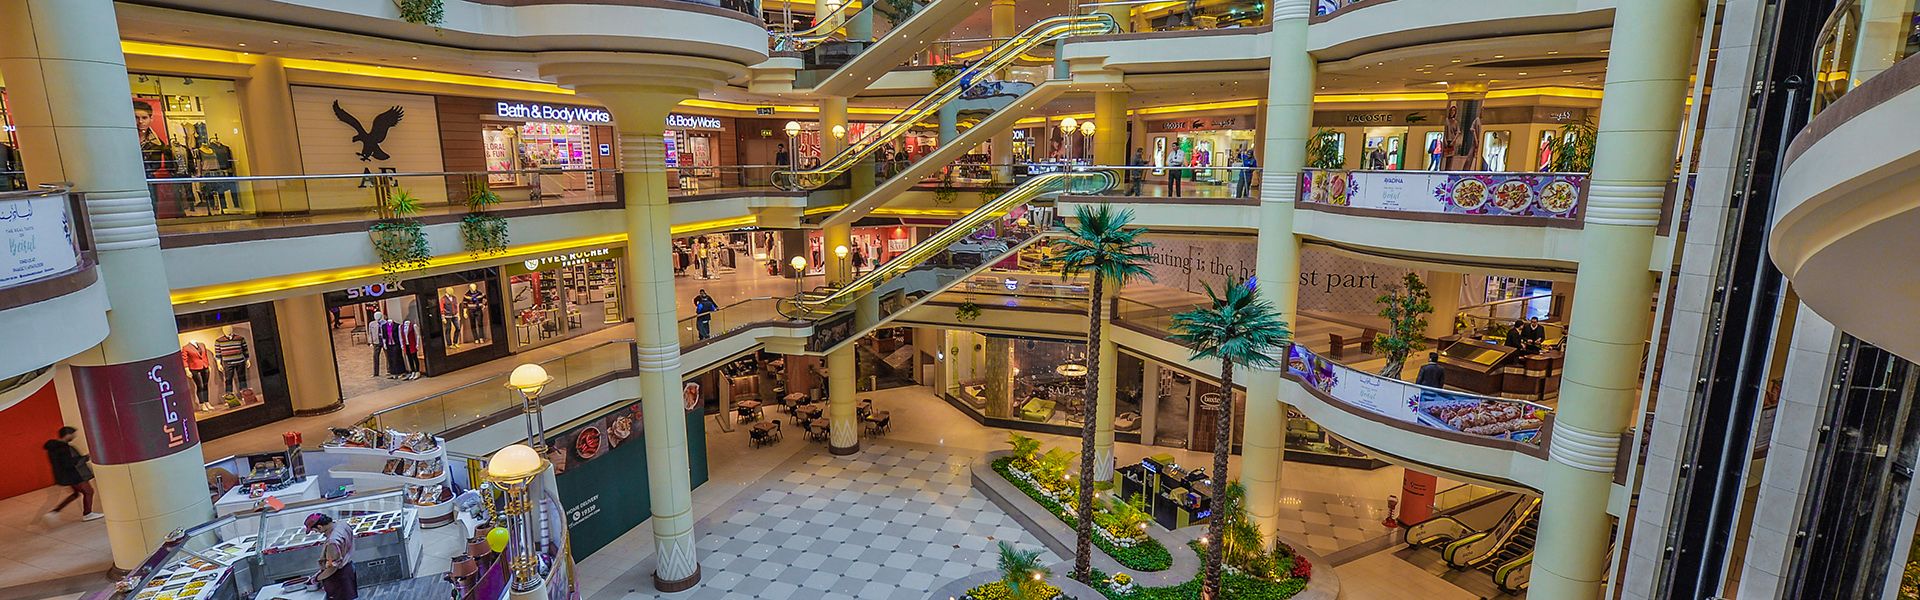 Citystars Shopping Mall. Over 750 